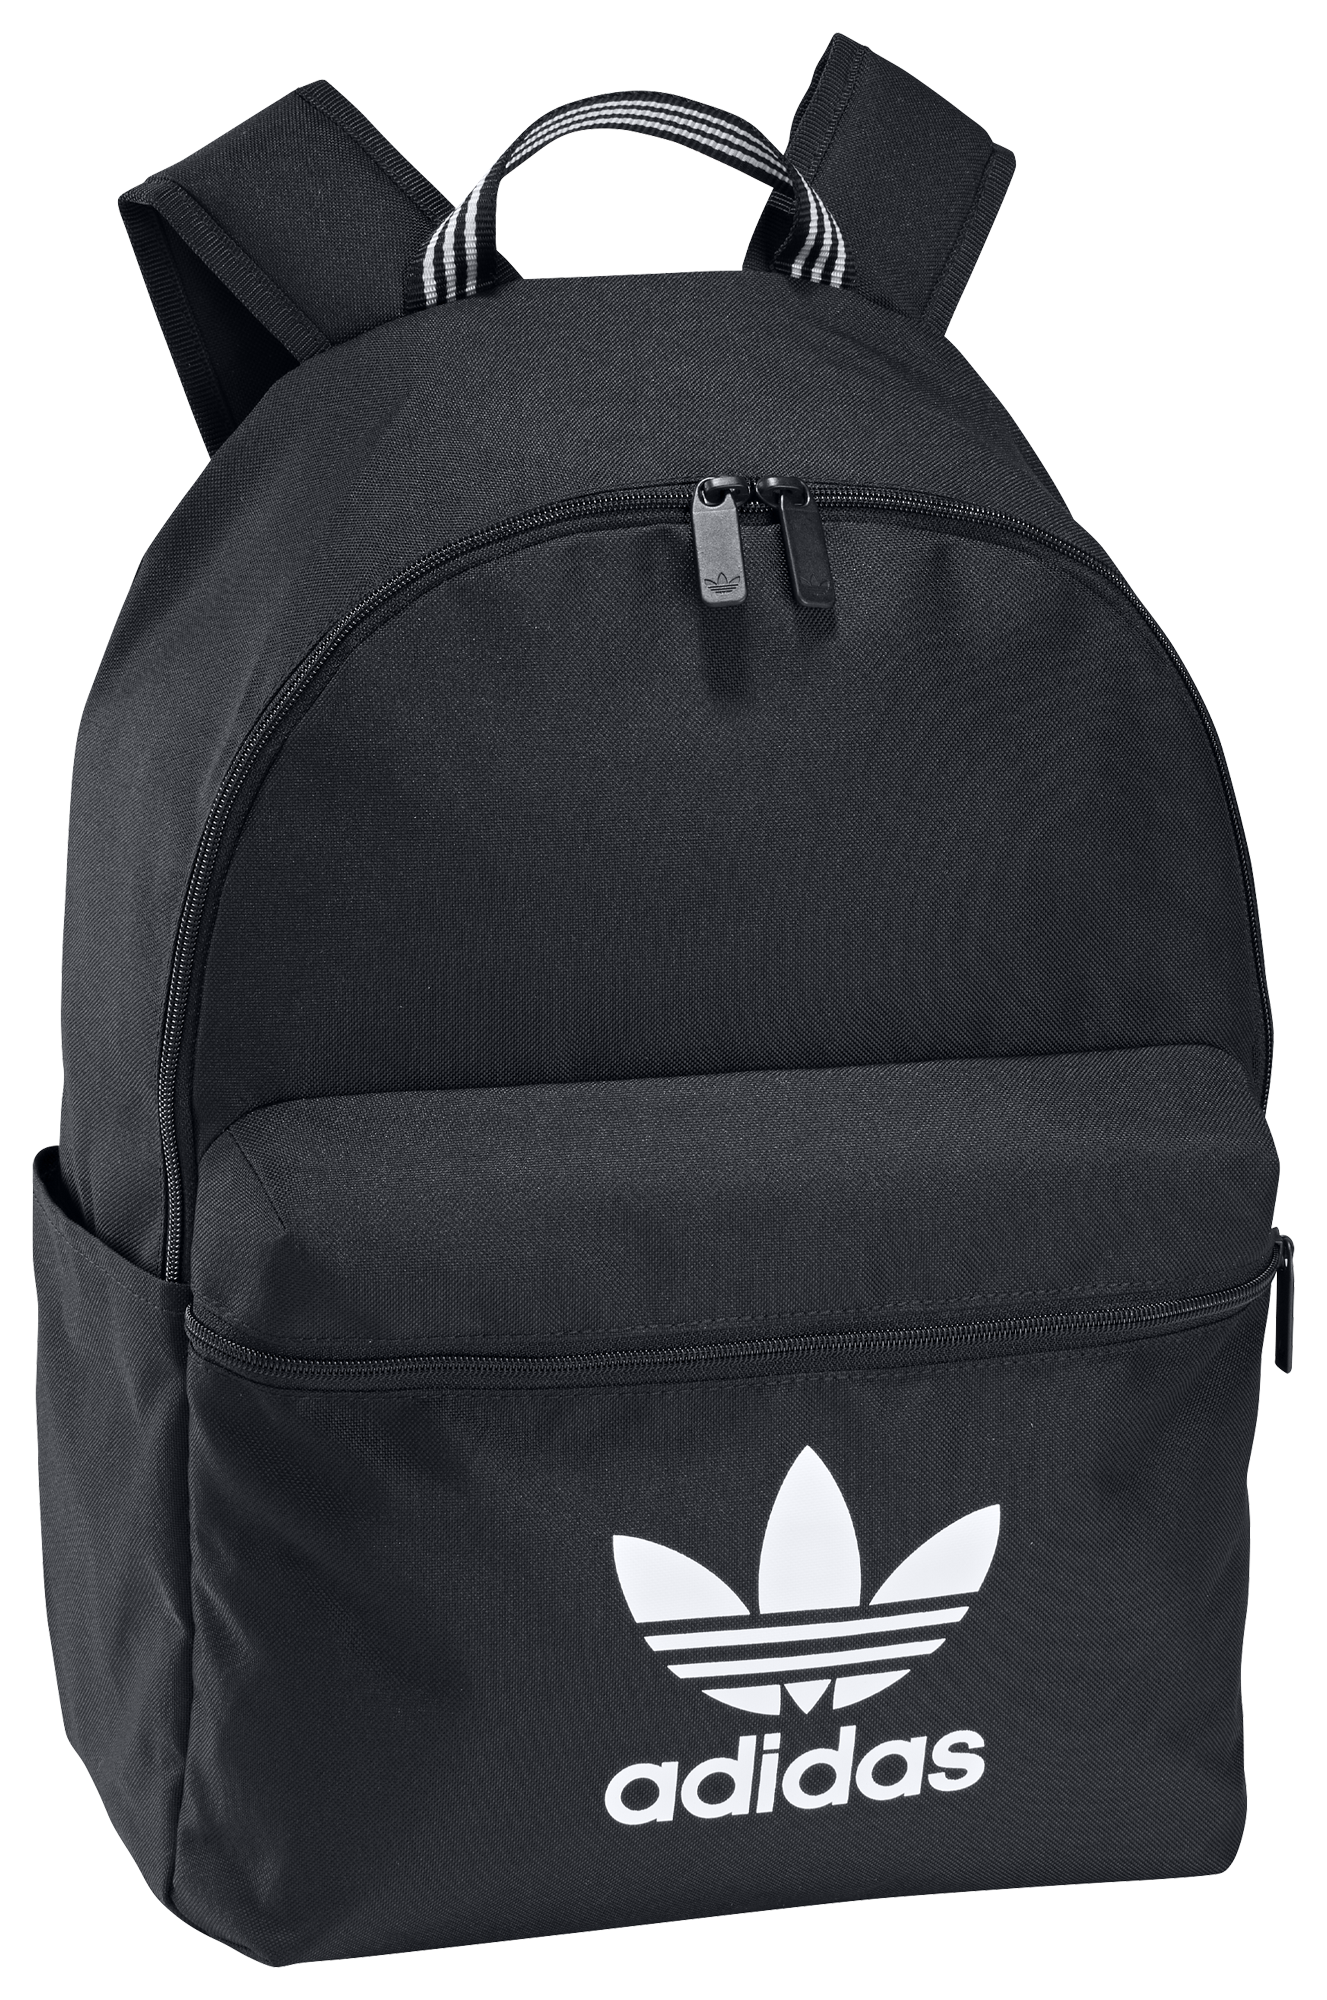 adidas Originals Adicolor Backpack  - Adult